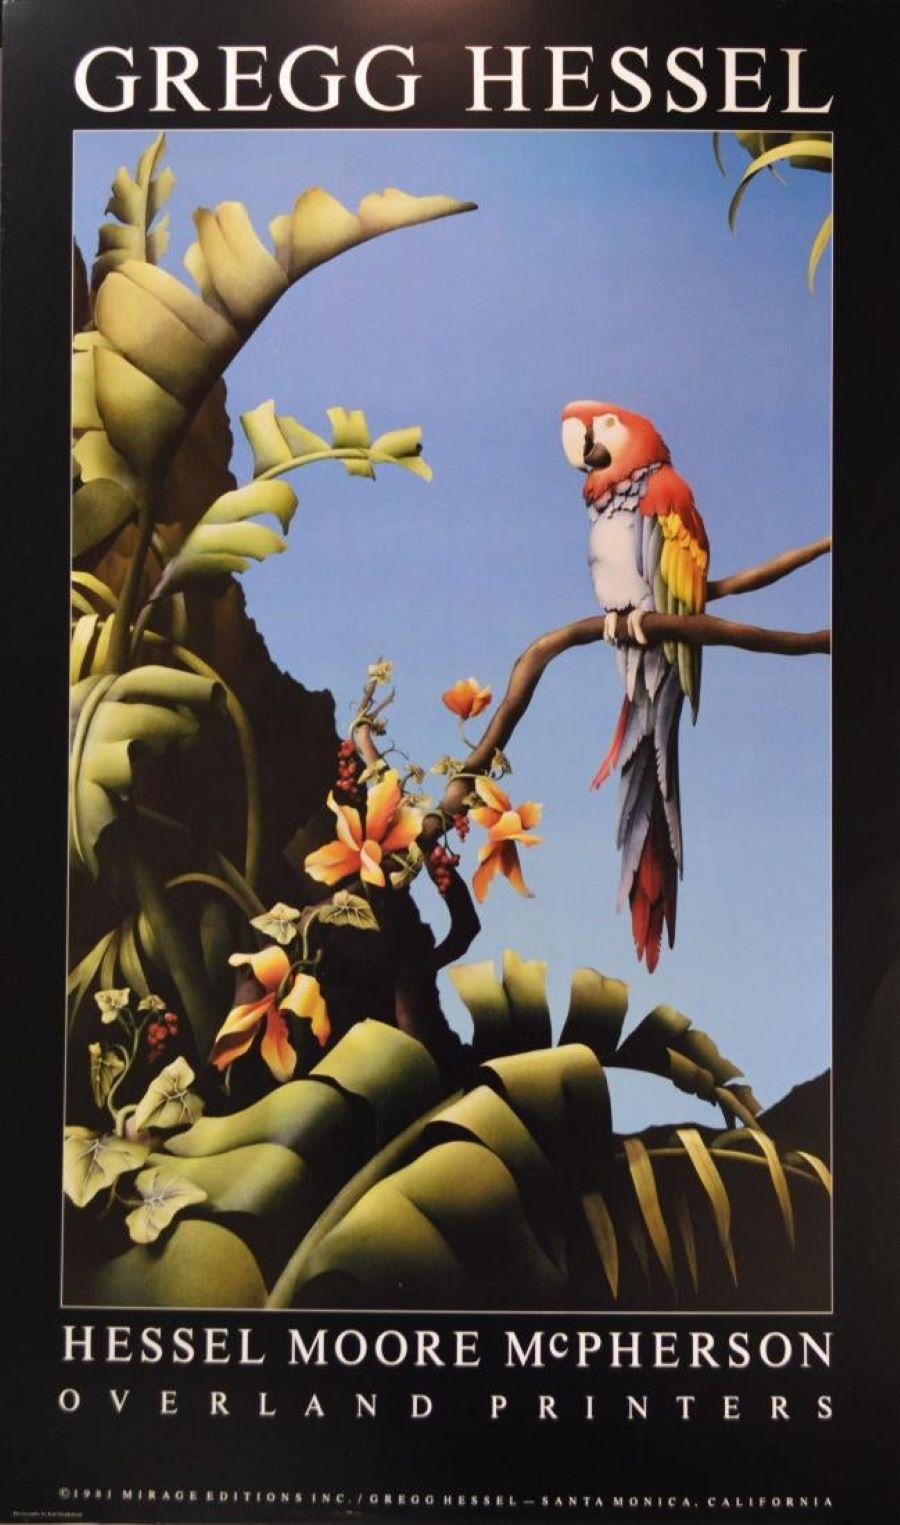 Gregg Hessel Animal Print - Poster-Hessel Moore McPherson, Overland Printers